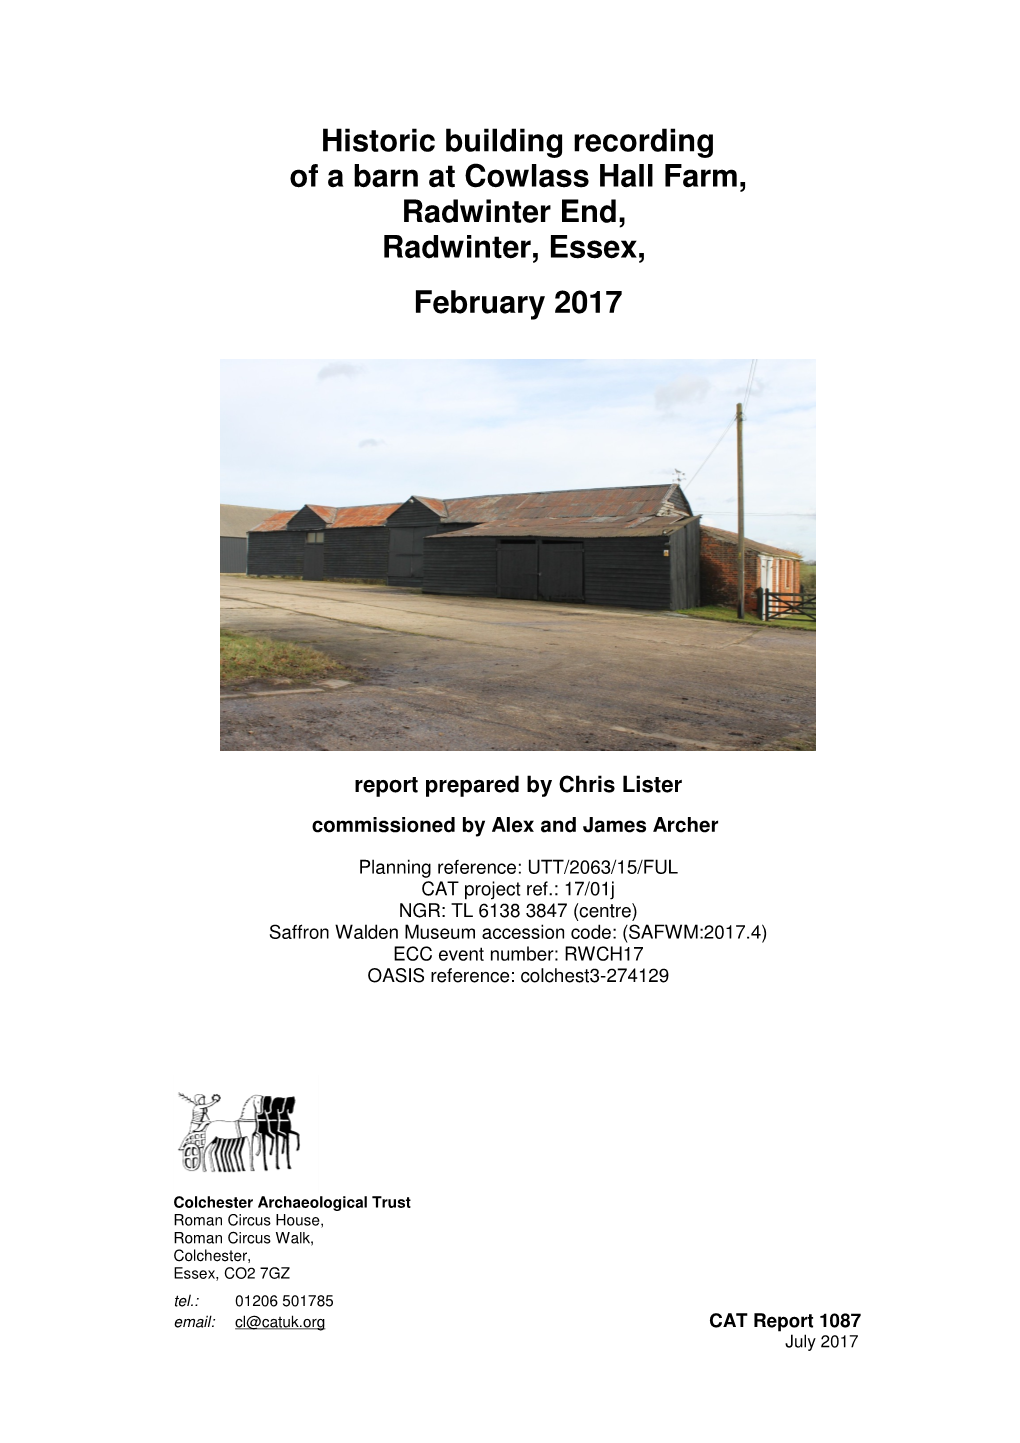 Historic Building Recording of a Barn at Cowlass Hall Farm, Radwinter End, Radwinter, Essex, February 2017